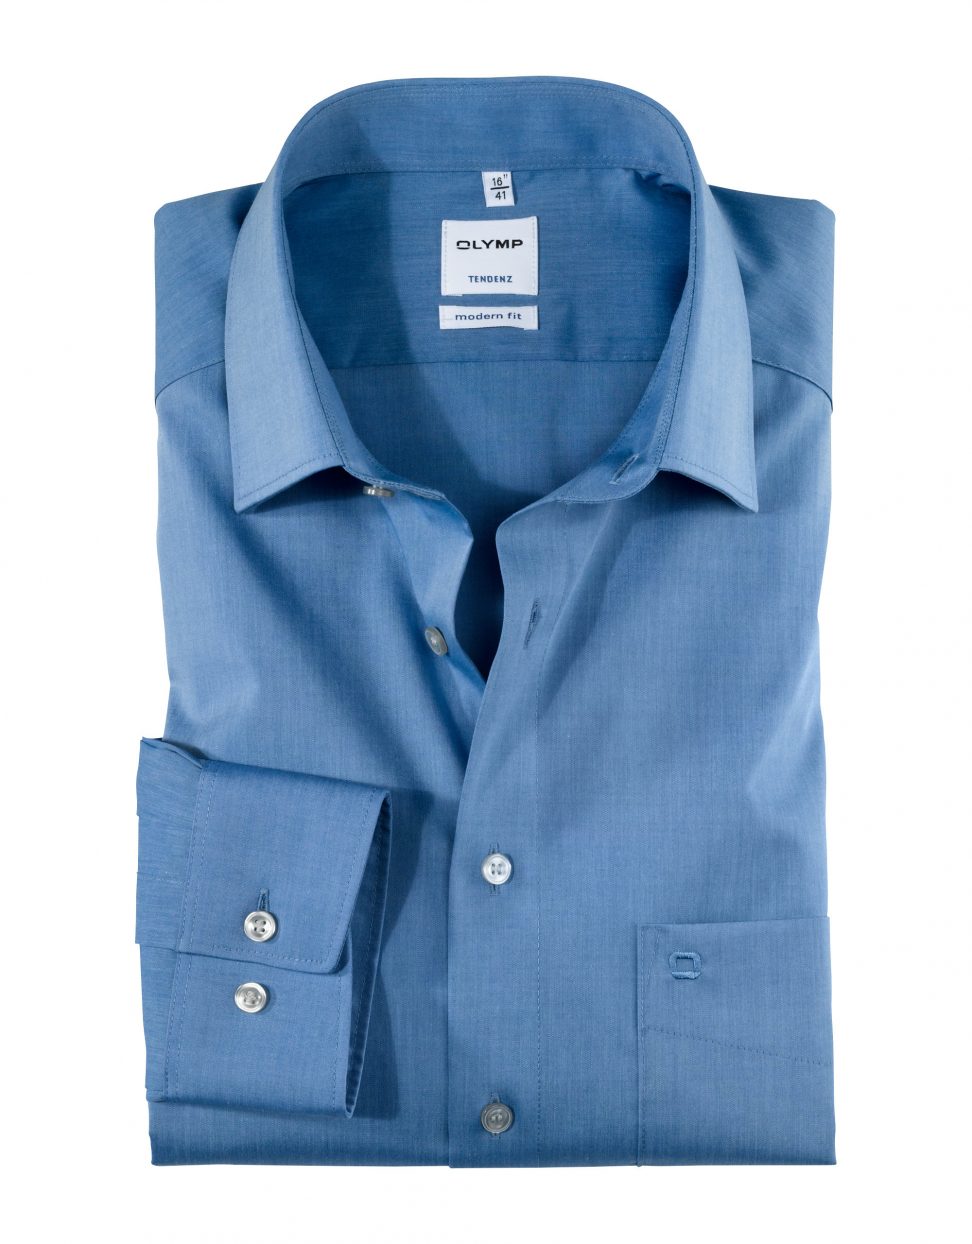 Koszula OLYMP Tendenz, modern fit, niebieska/ New Kent / 07406415